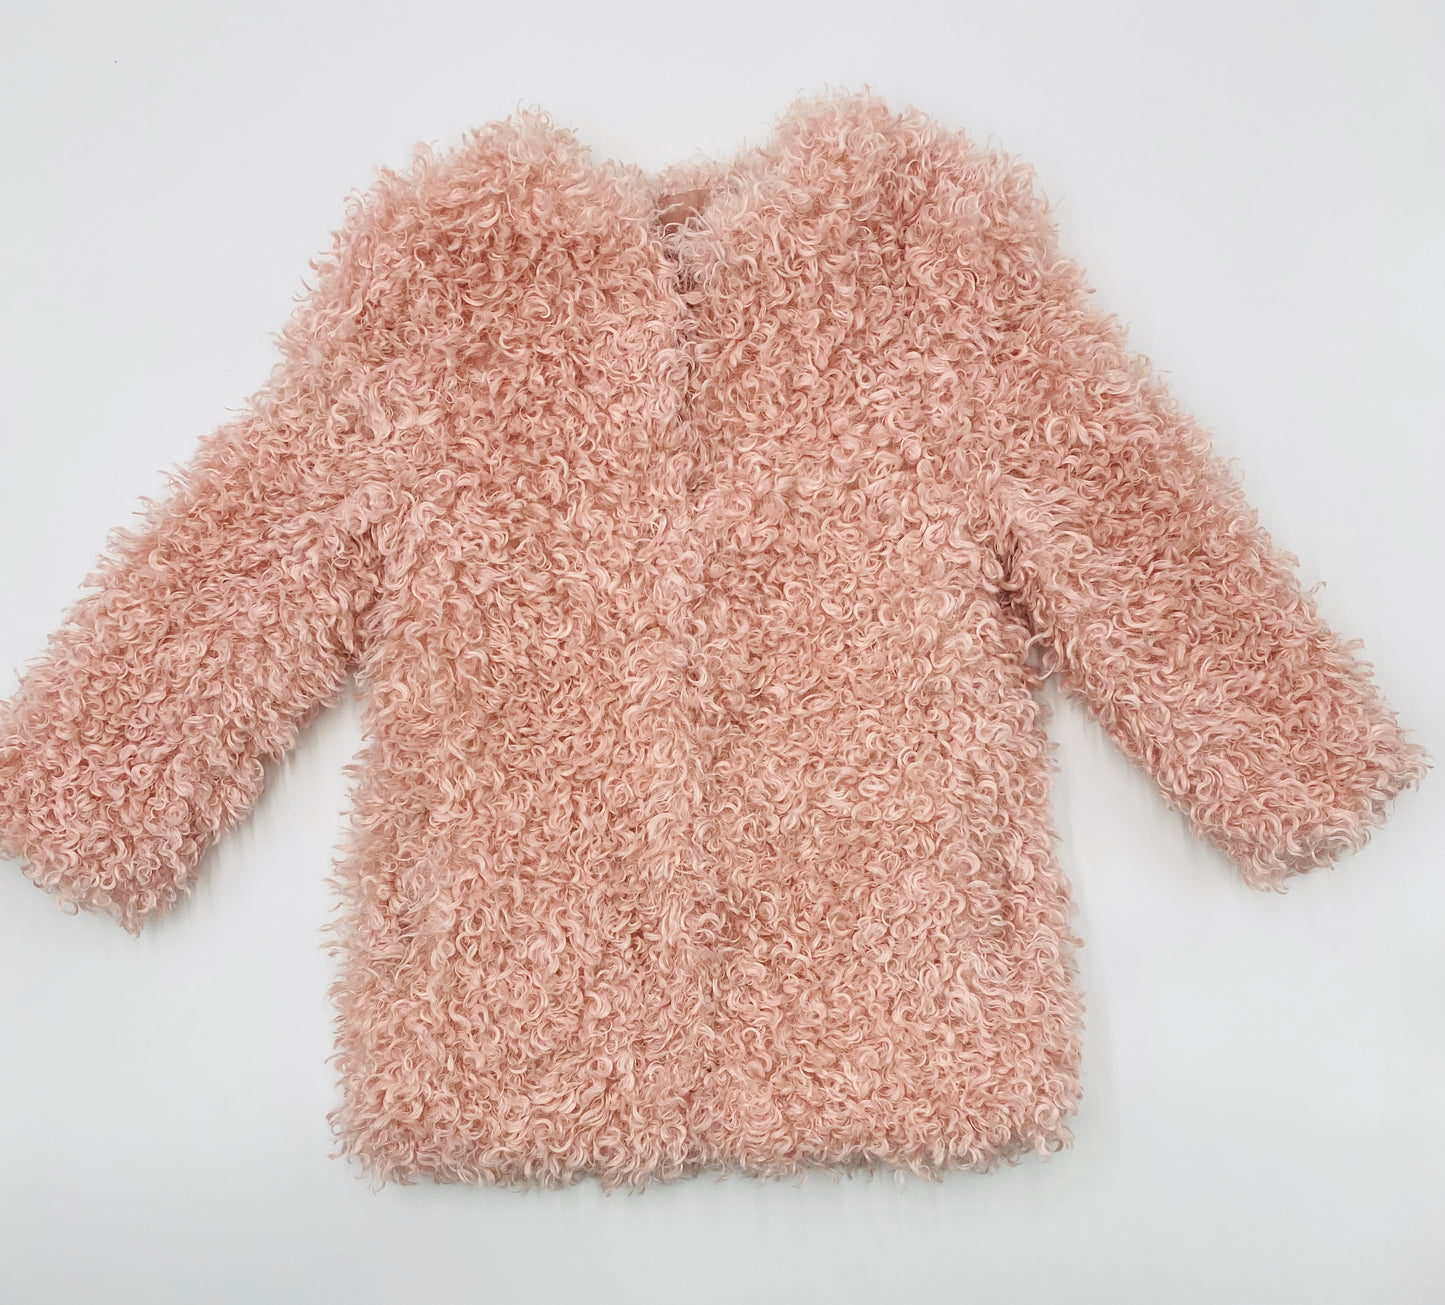 Cotton Candy Pink Fur coat.